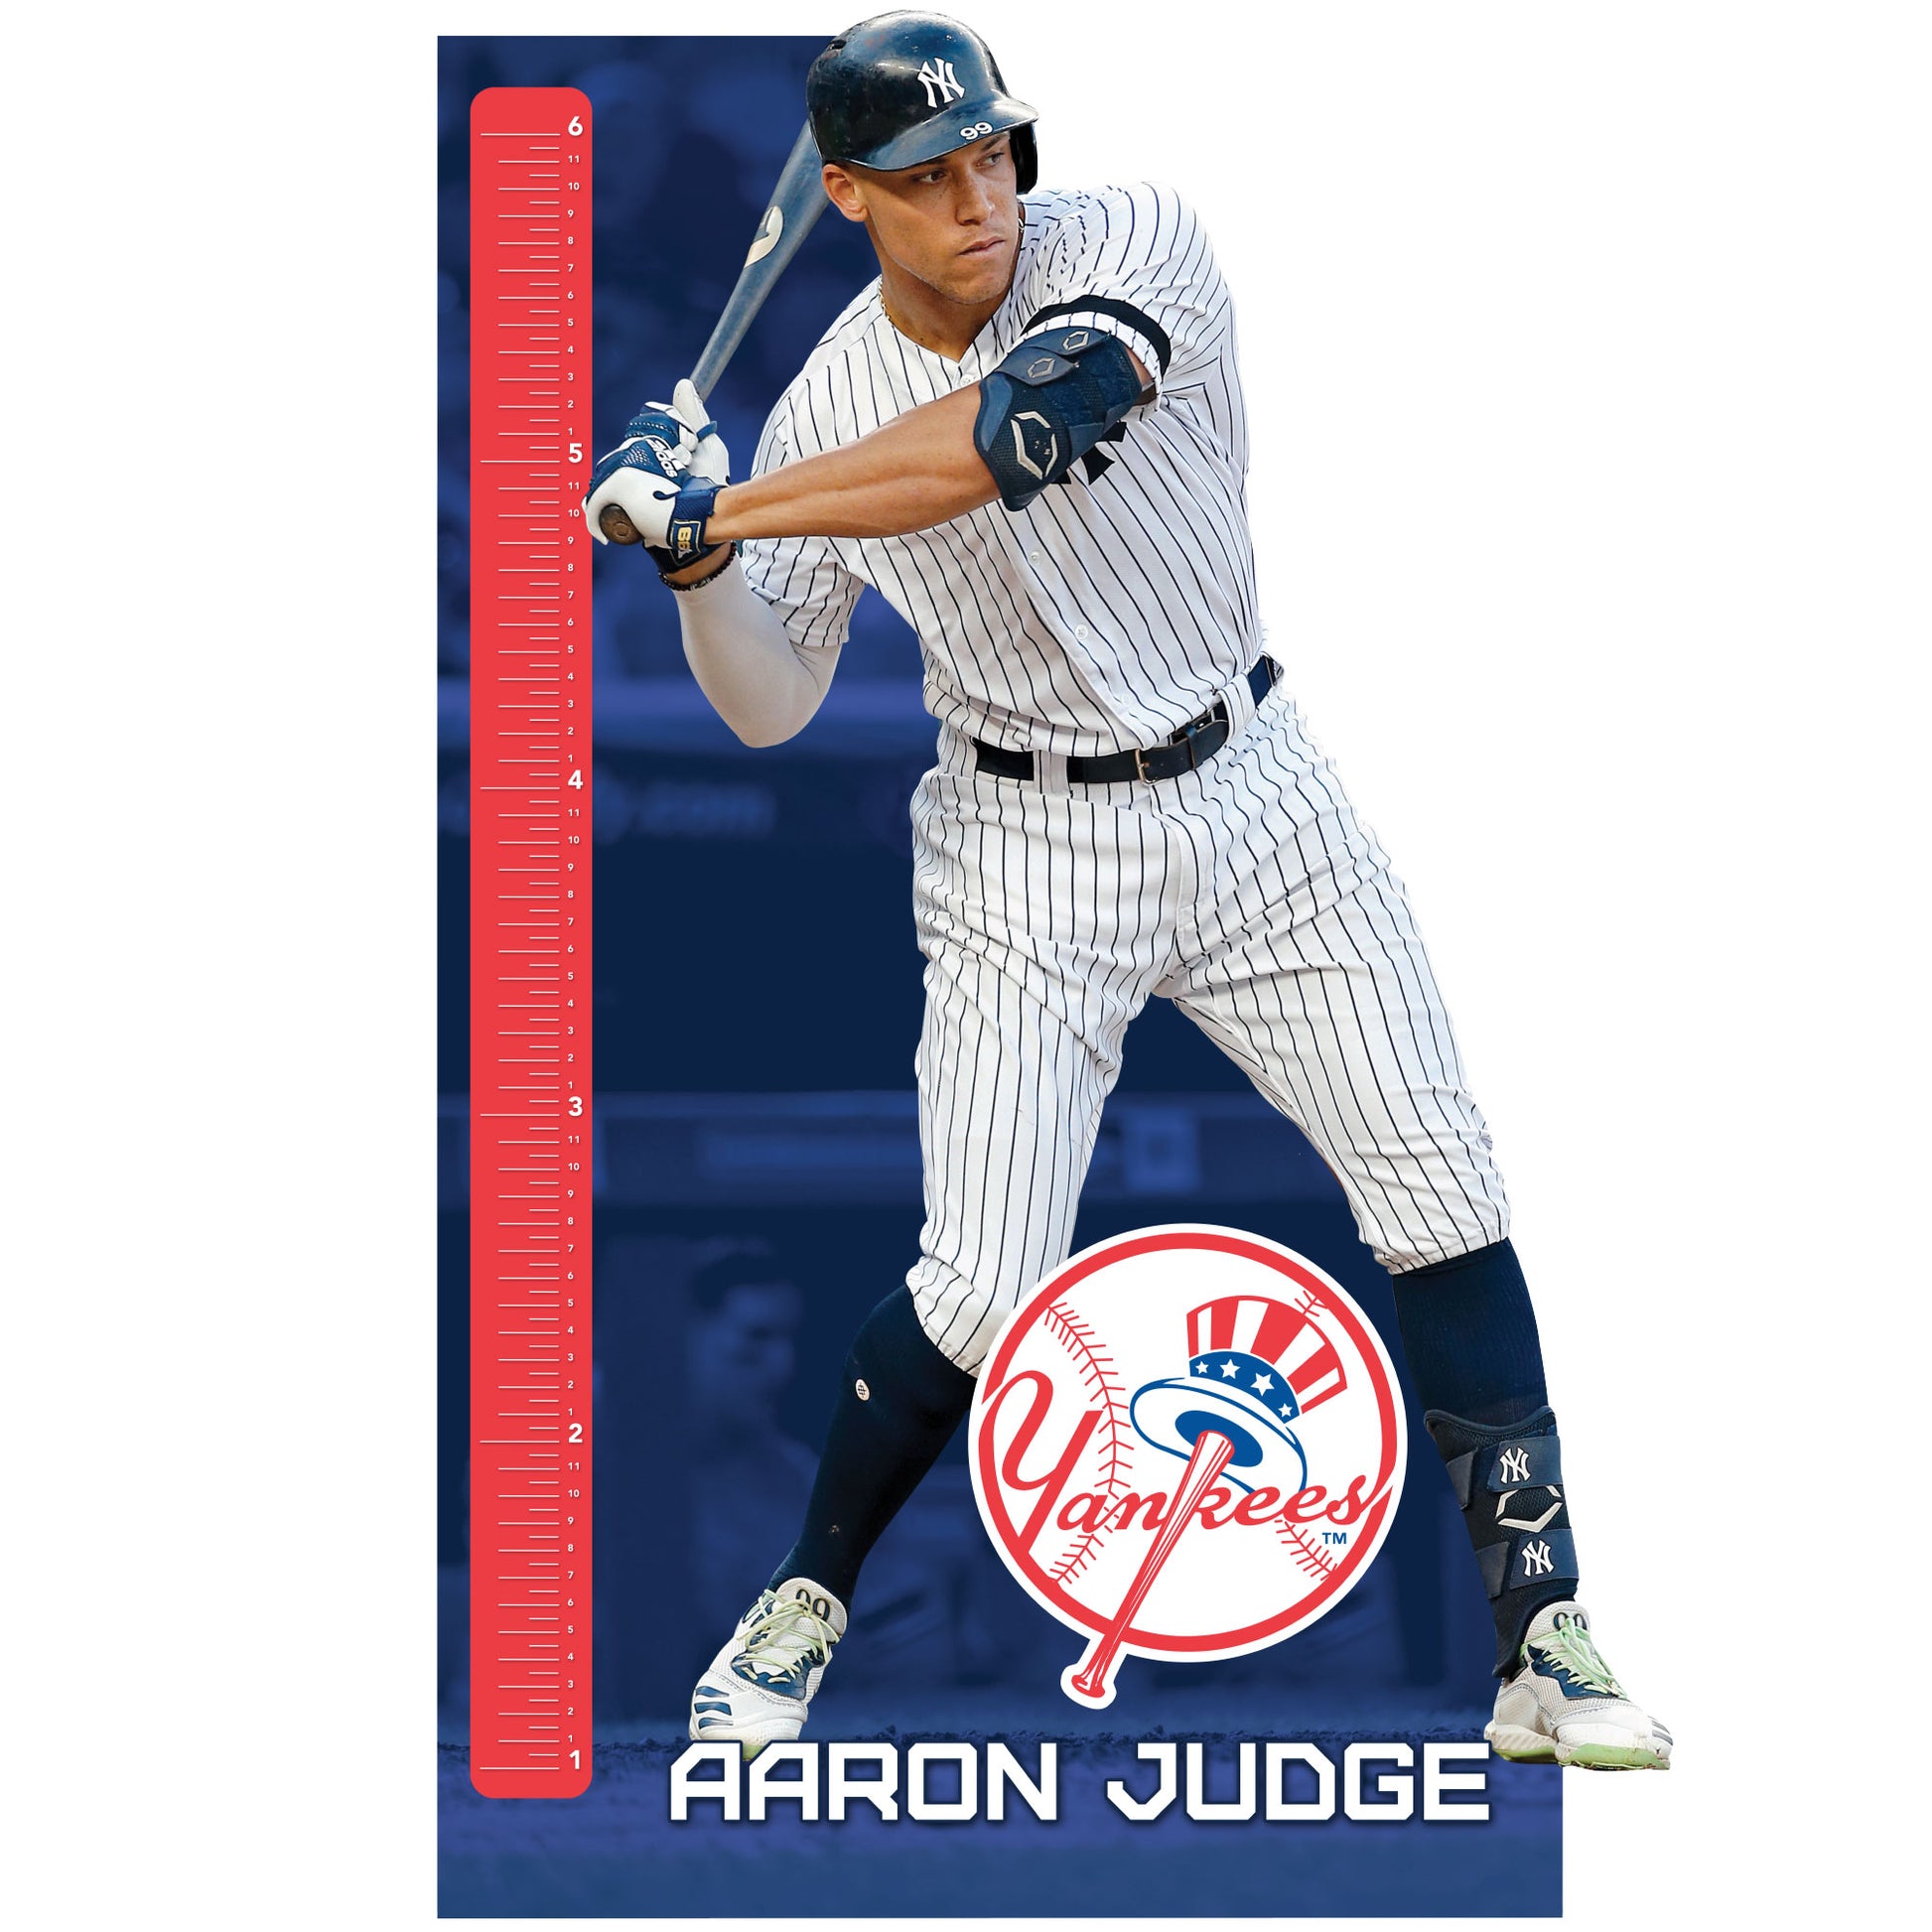 Aaron Judge - Ny Yankees - Hand Signed 2017 and similar items